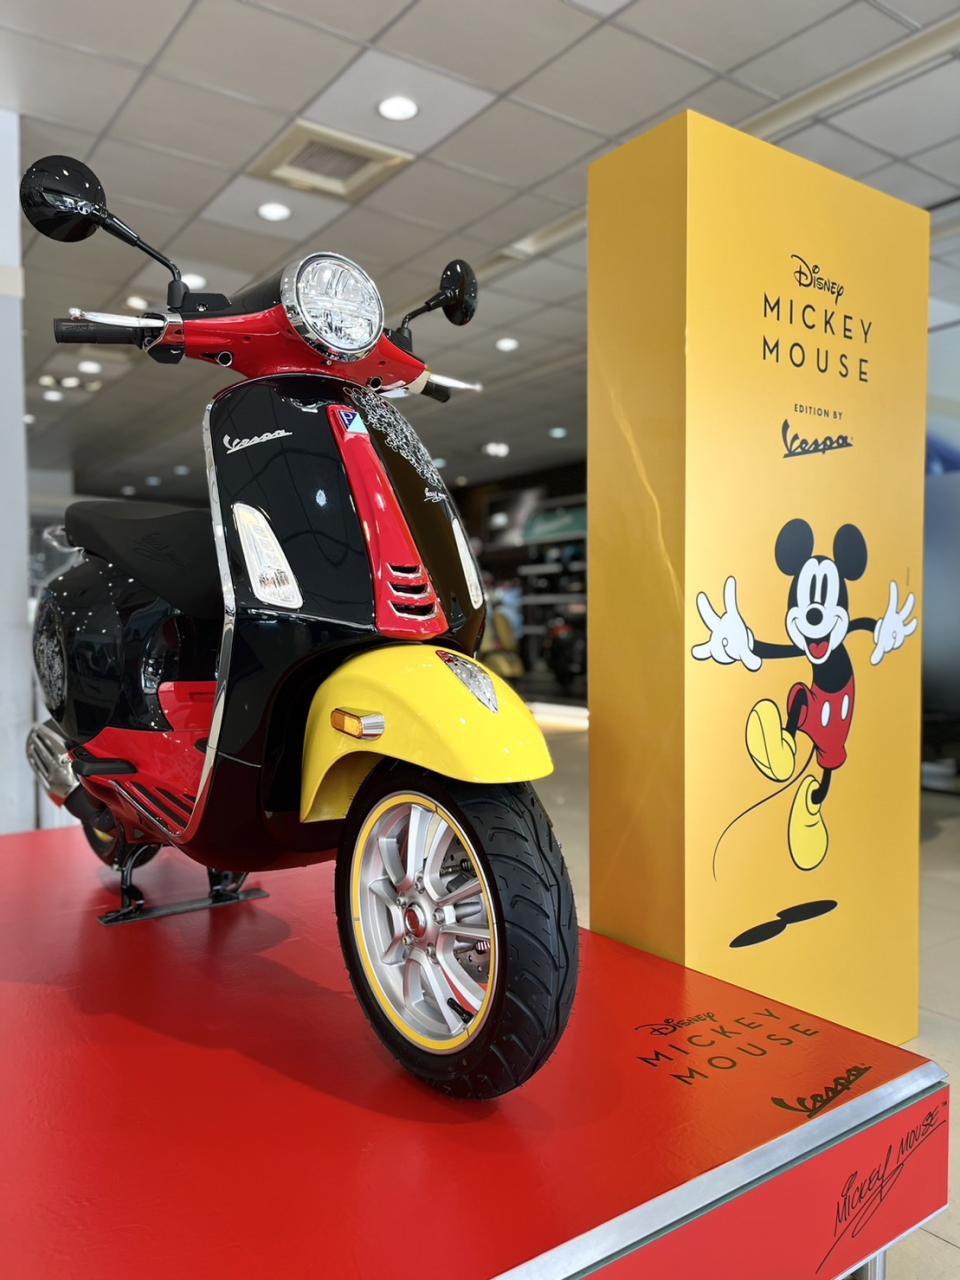 Vespa X Disney米老鼠特仕版首批少量到港，現於Vespa全台授權經銷門市展售中